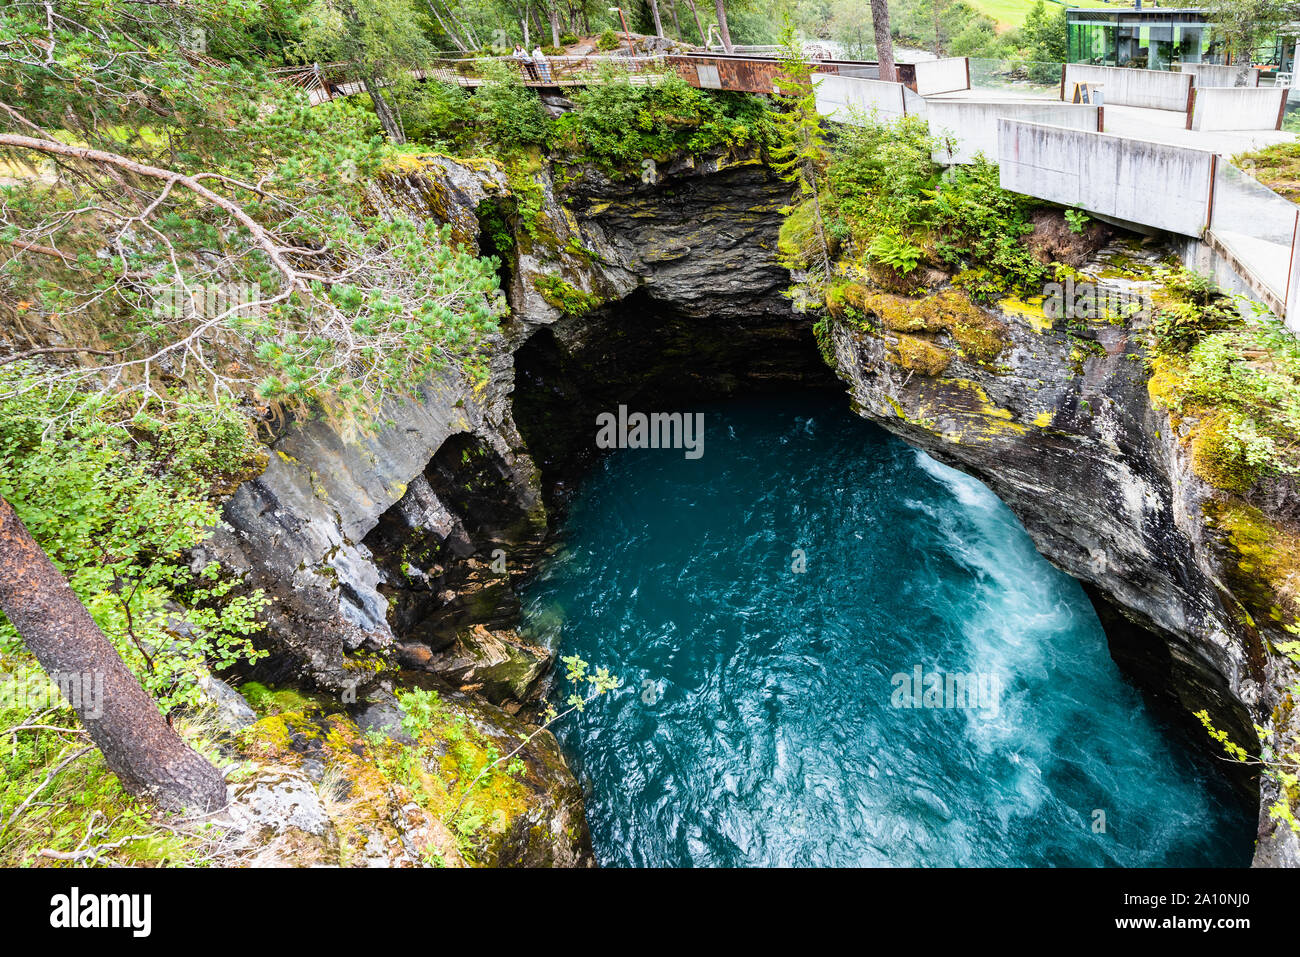 Gudbrandsjuvet ravine and Valldola river running through with waterfall, Valldal, Norway Stock Photo